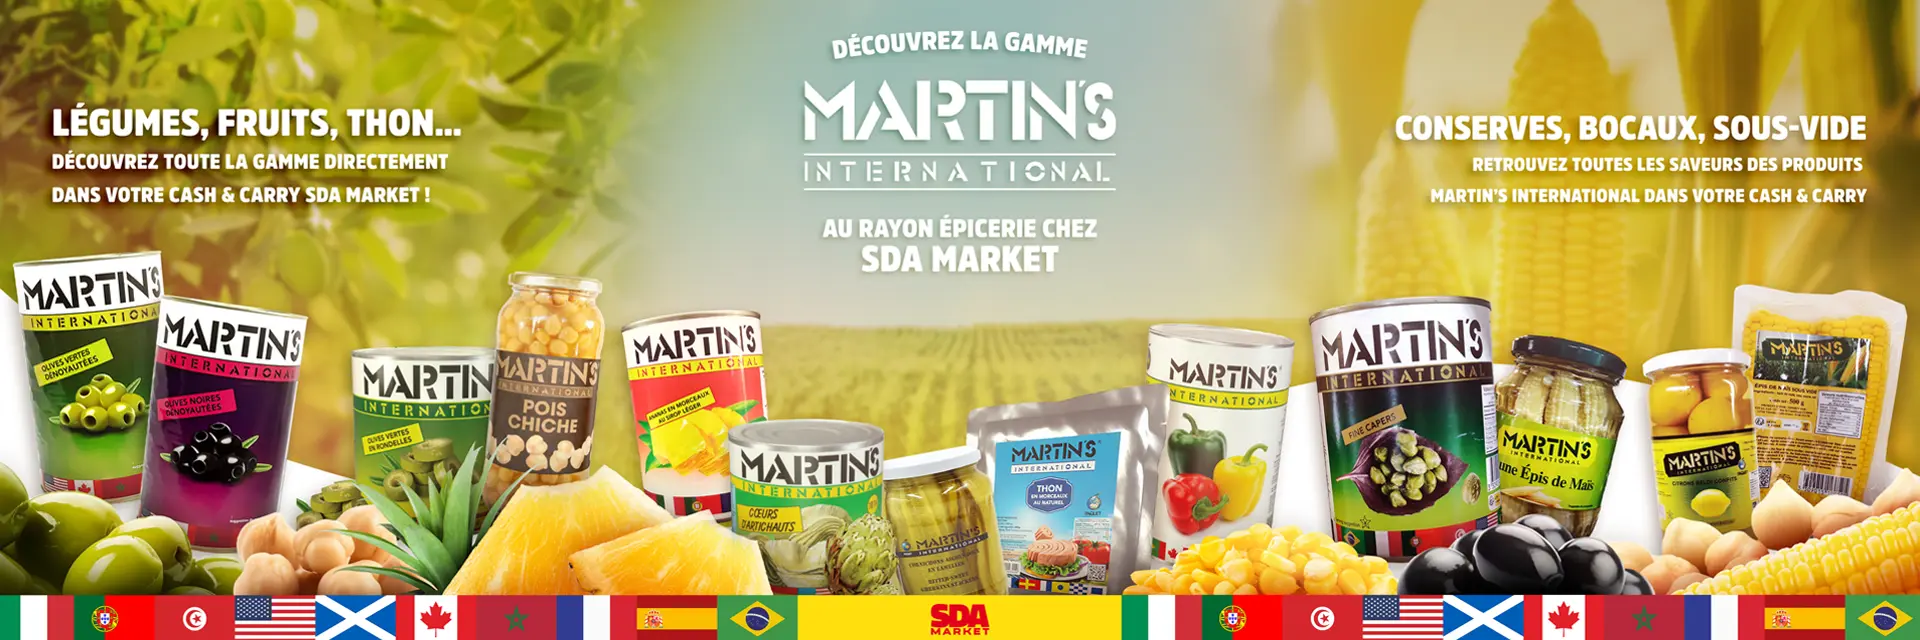 Bannière lancement Martin's International